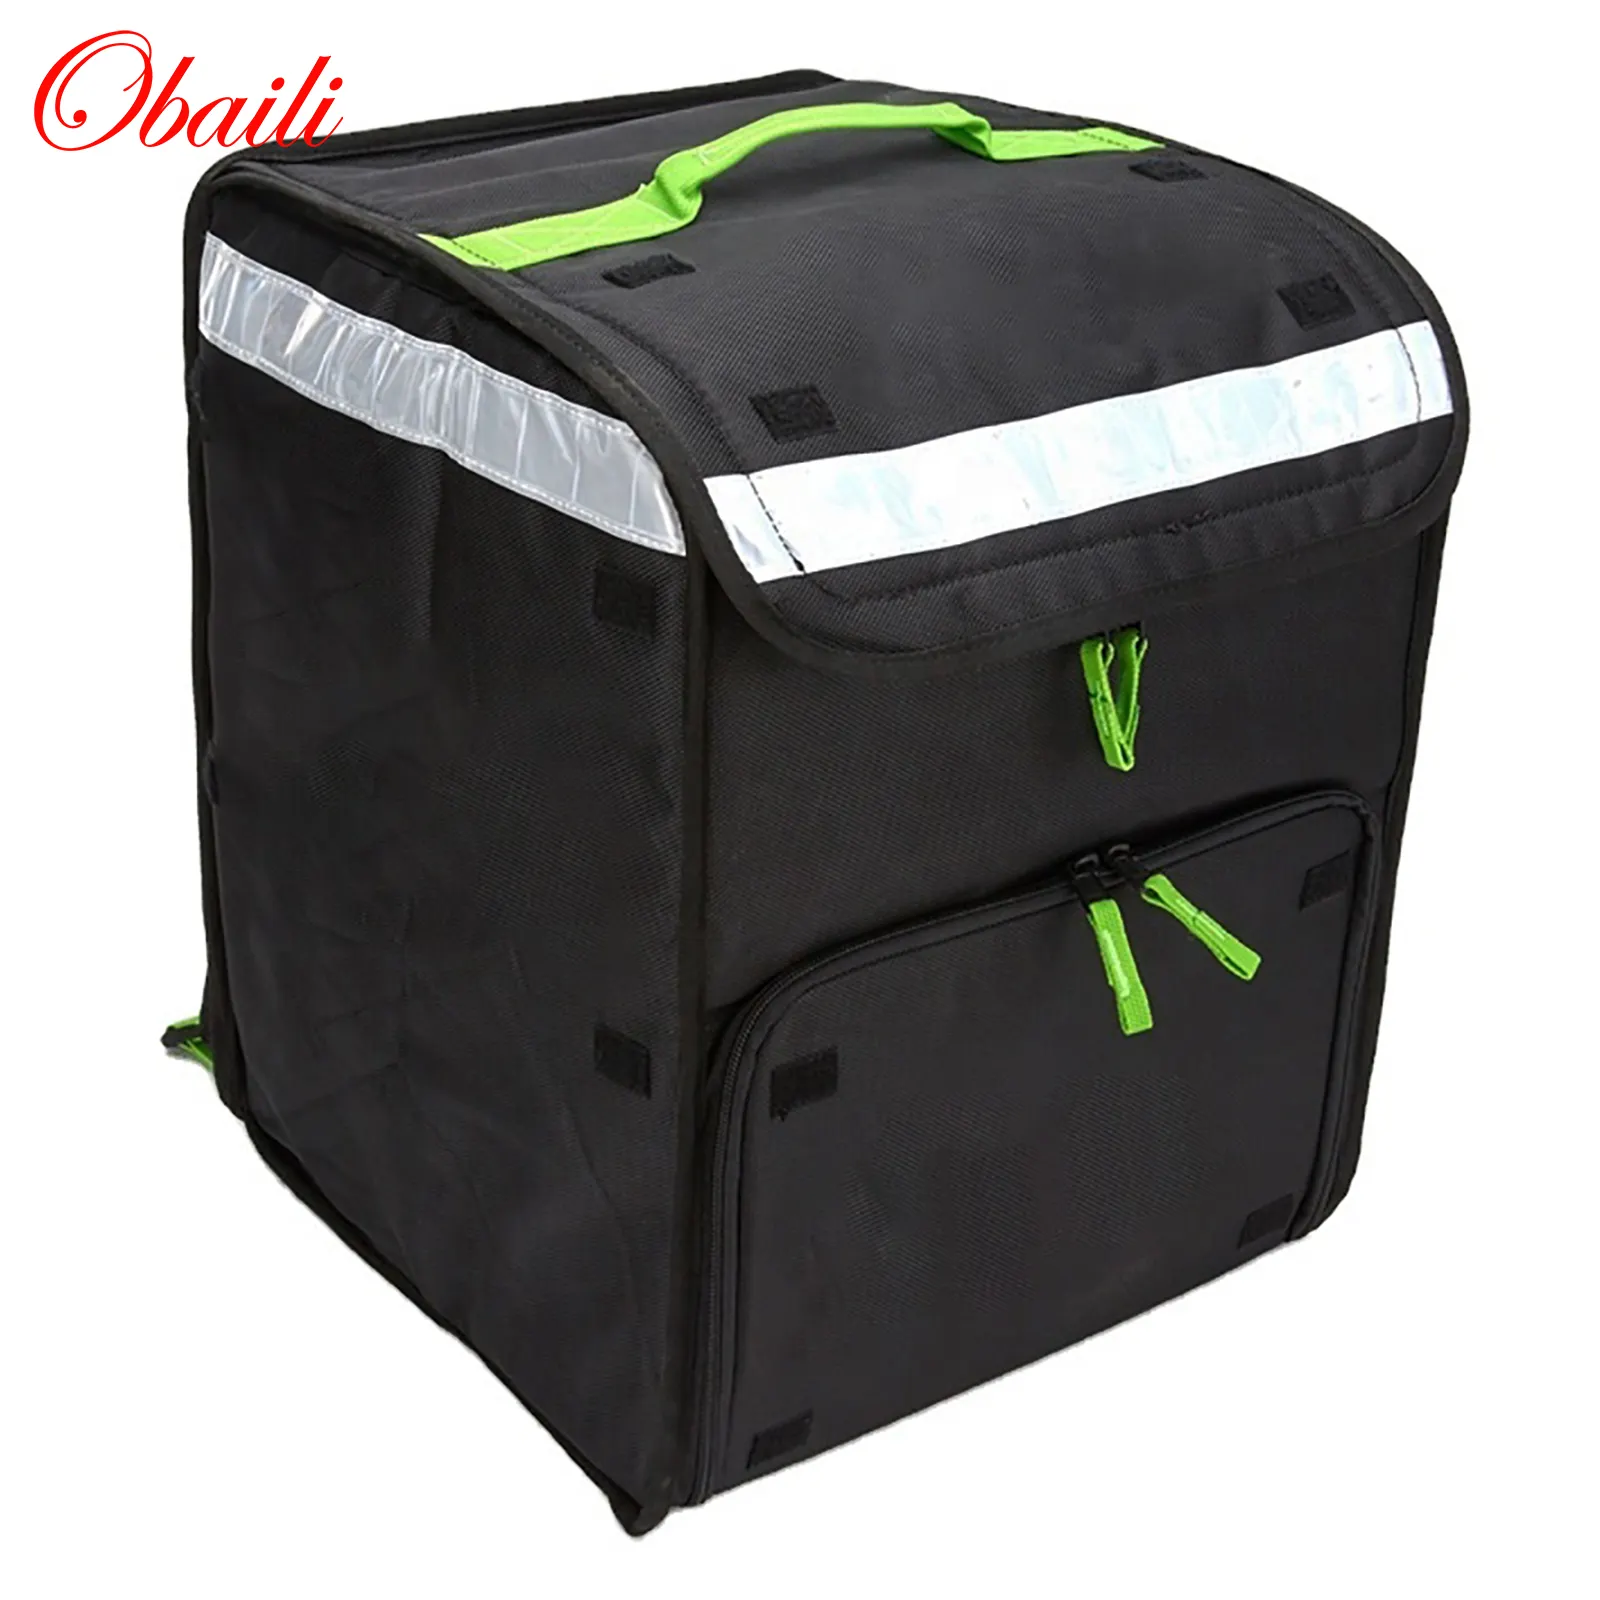 Obaili Custom Large Waterproof Fast Food Pizza Cooler Bag Cake Takeaway Box Freezer zaino Delivery Bag